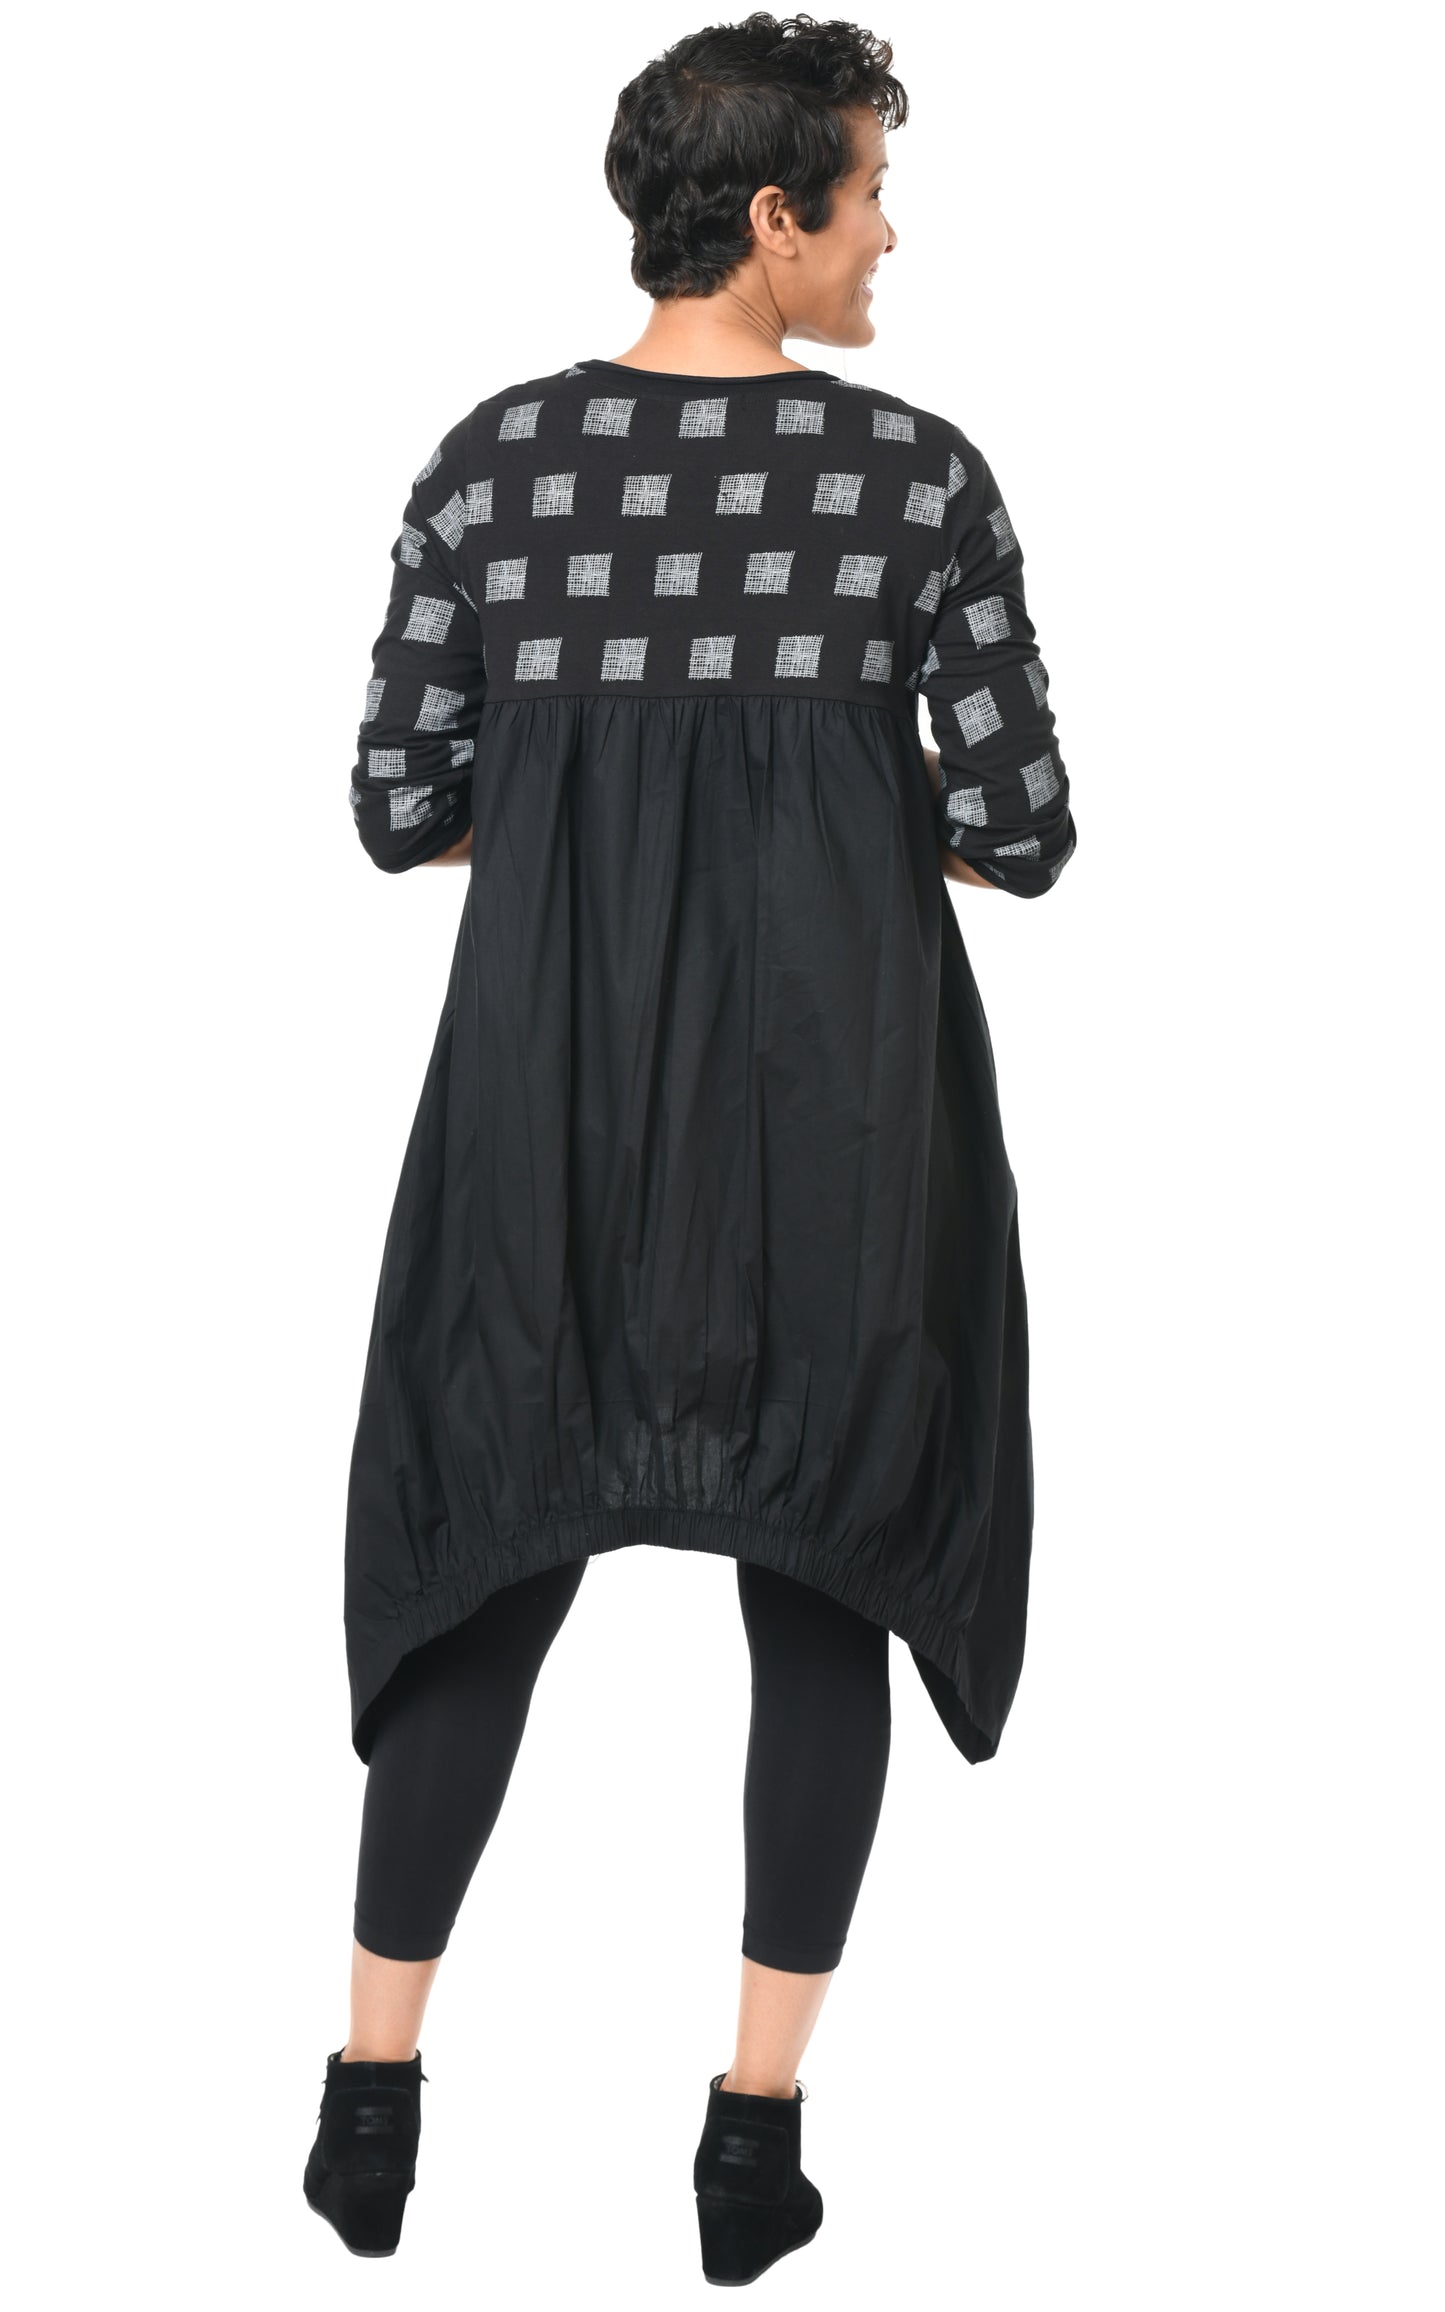 FINAL SALE SDM641 Adele Dress in Black Gray Mini Chex*